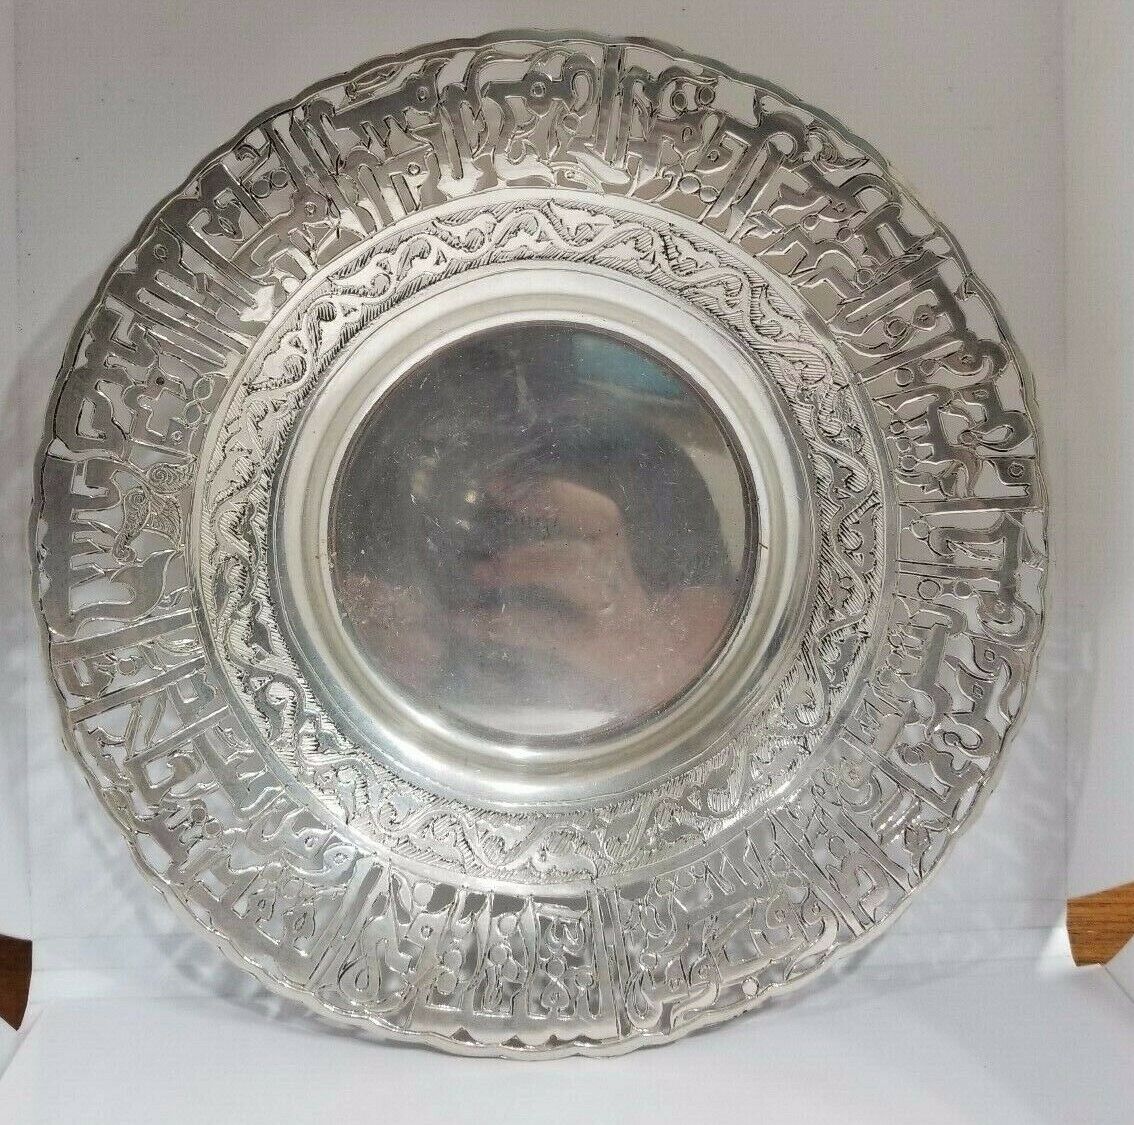 900 Silver Egyptian Hallmark Round Tray Weight 182.5 Grams